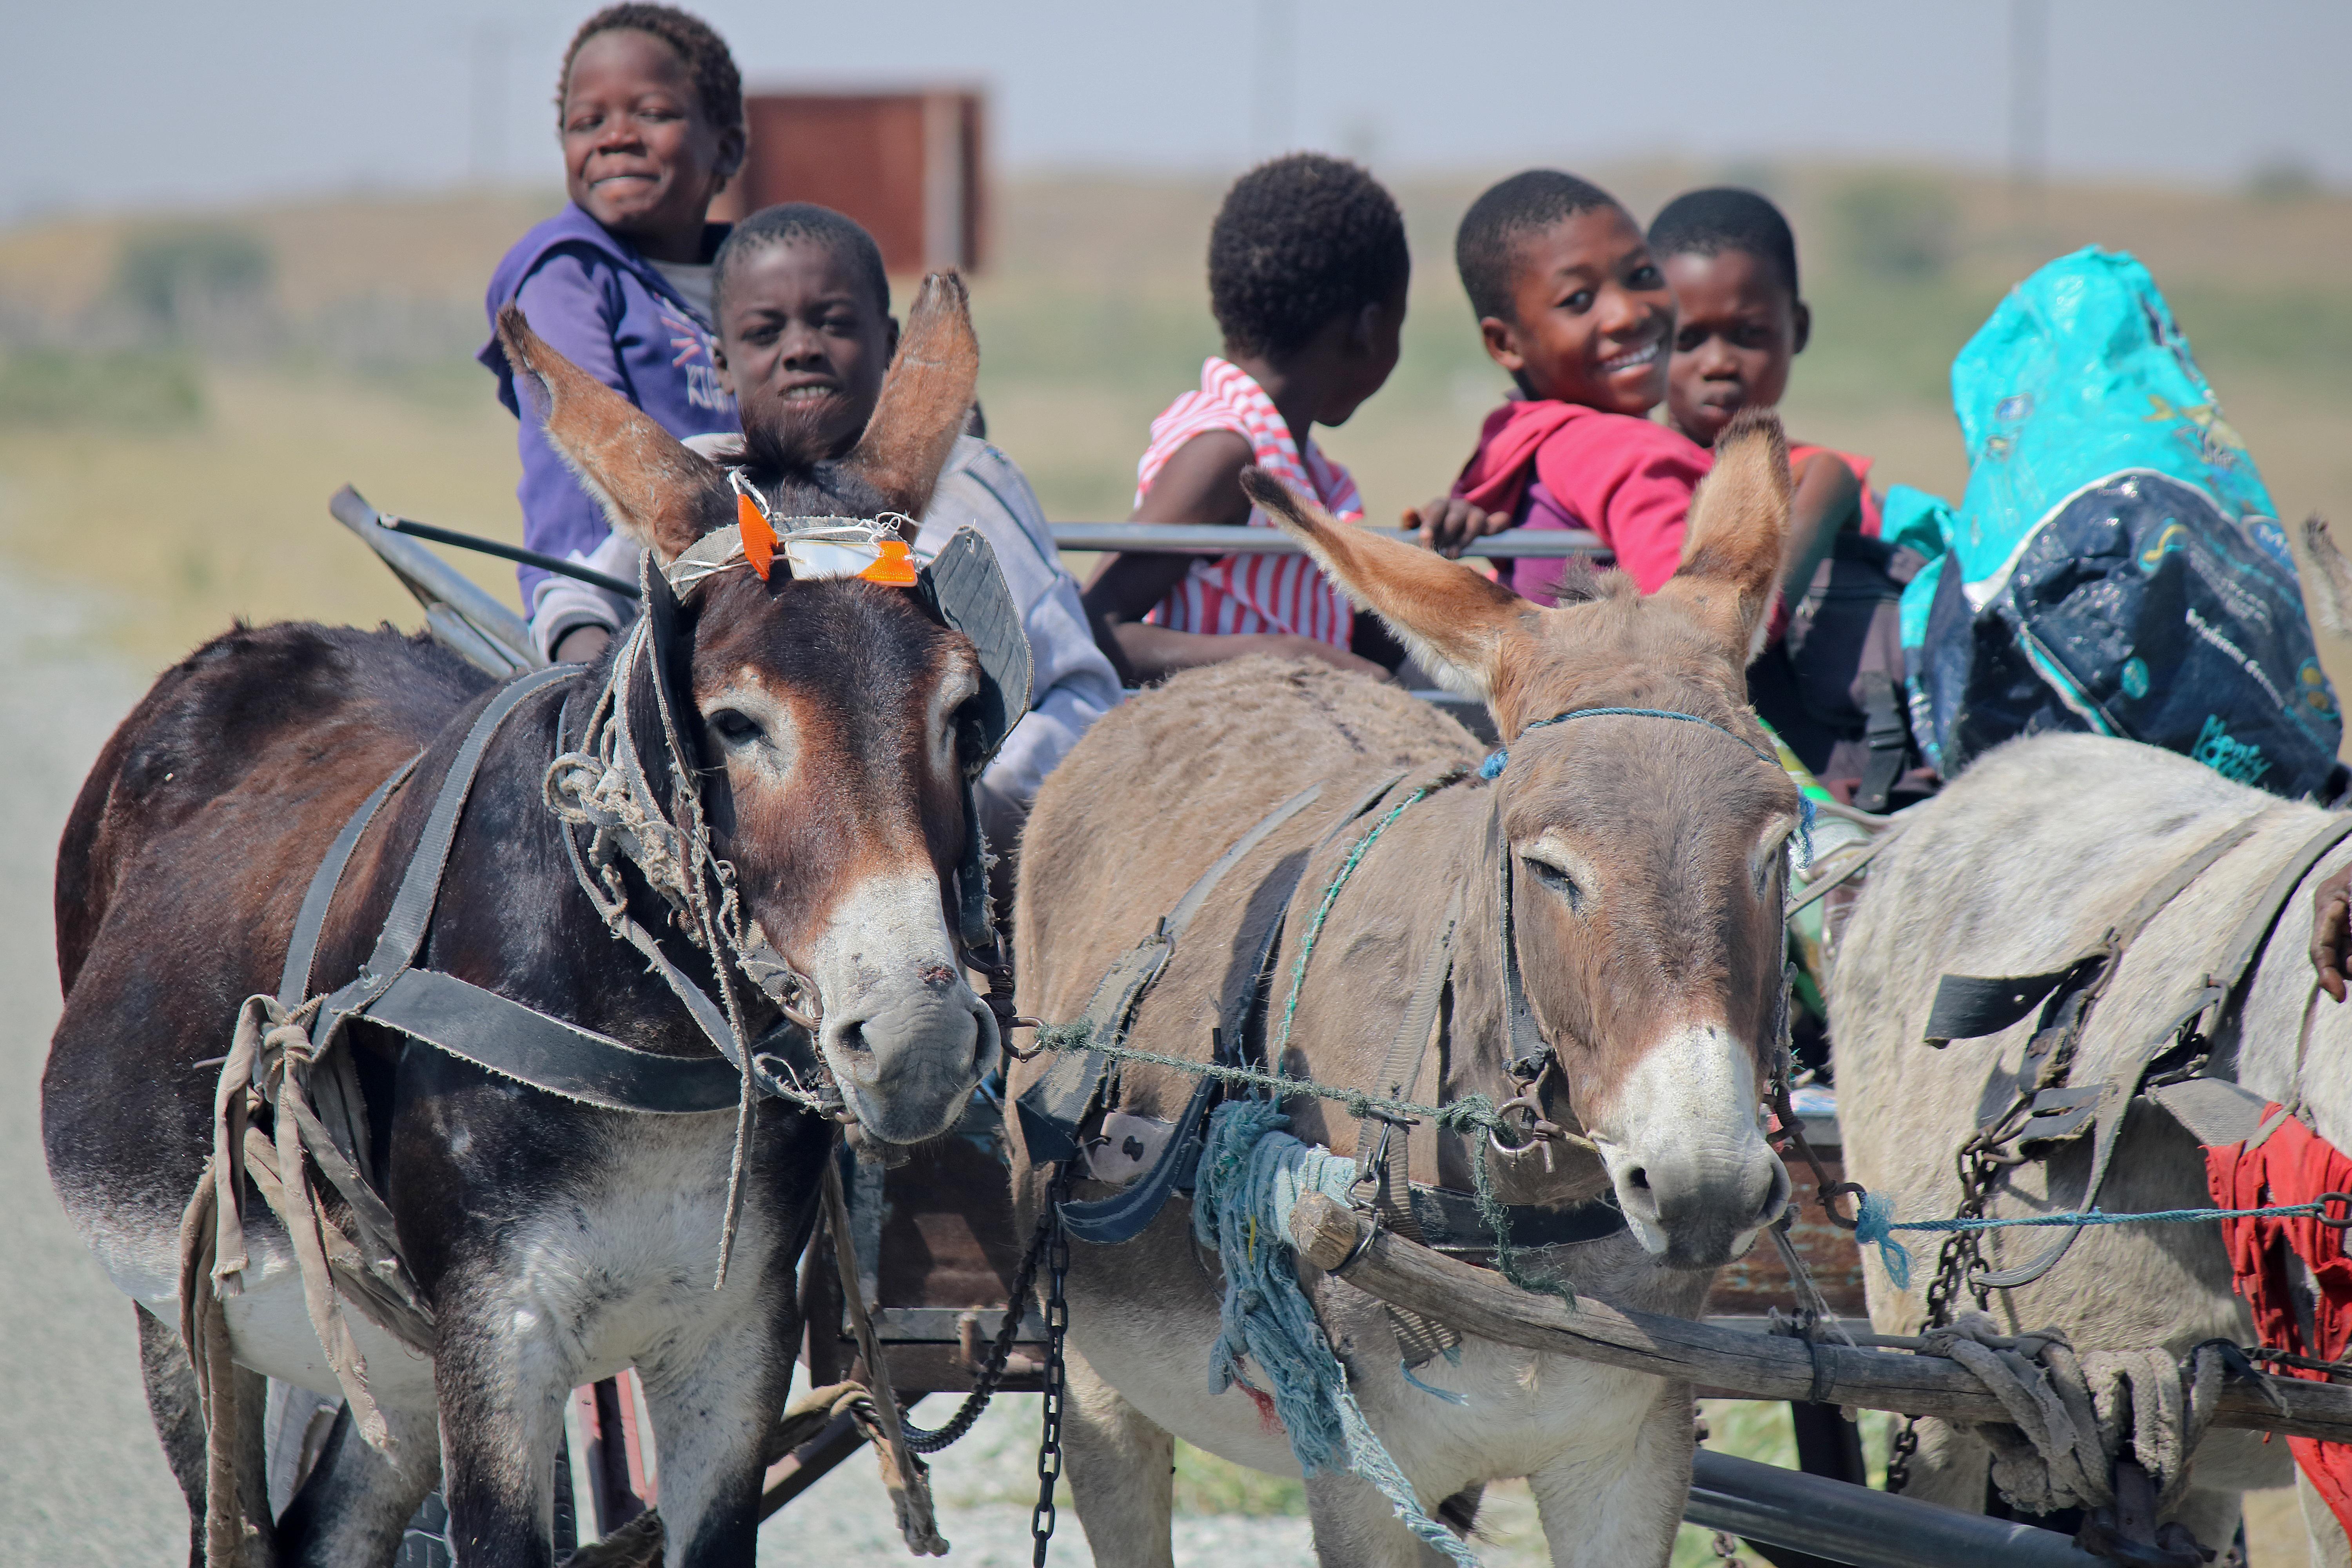 Children sitting on a donkey cart.